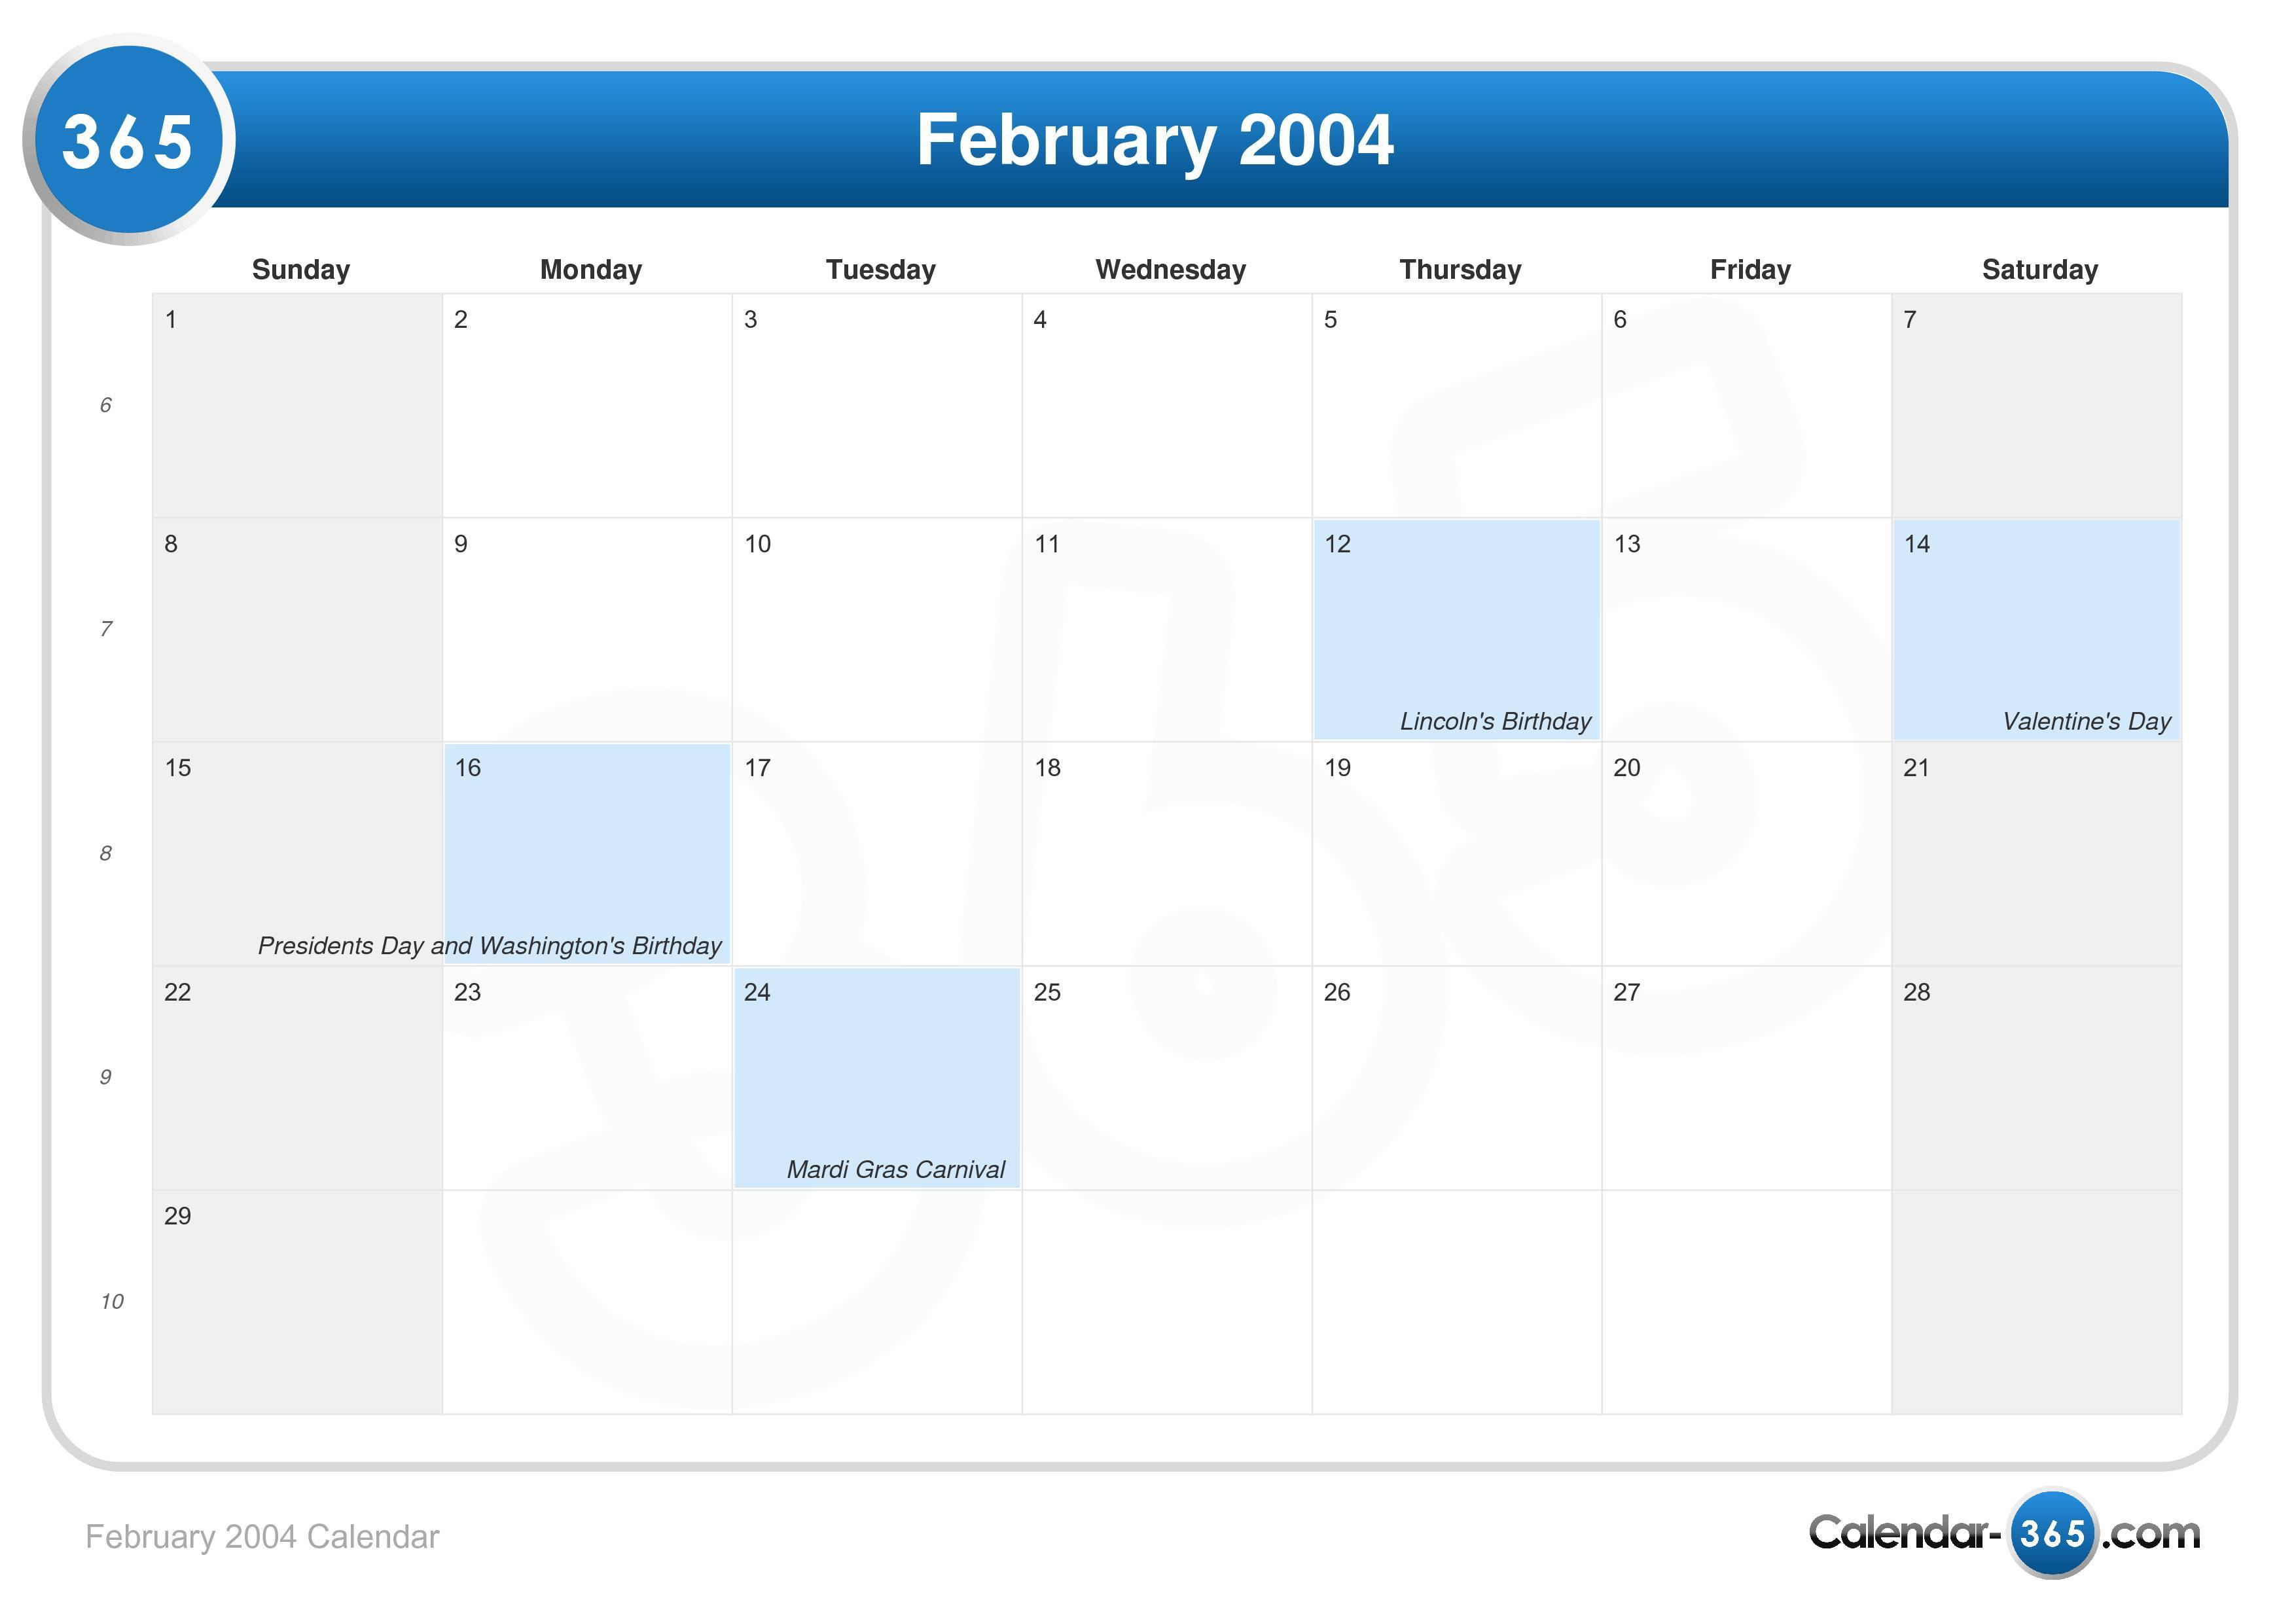 February 2004 Calendar